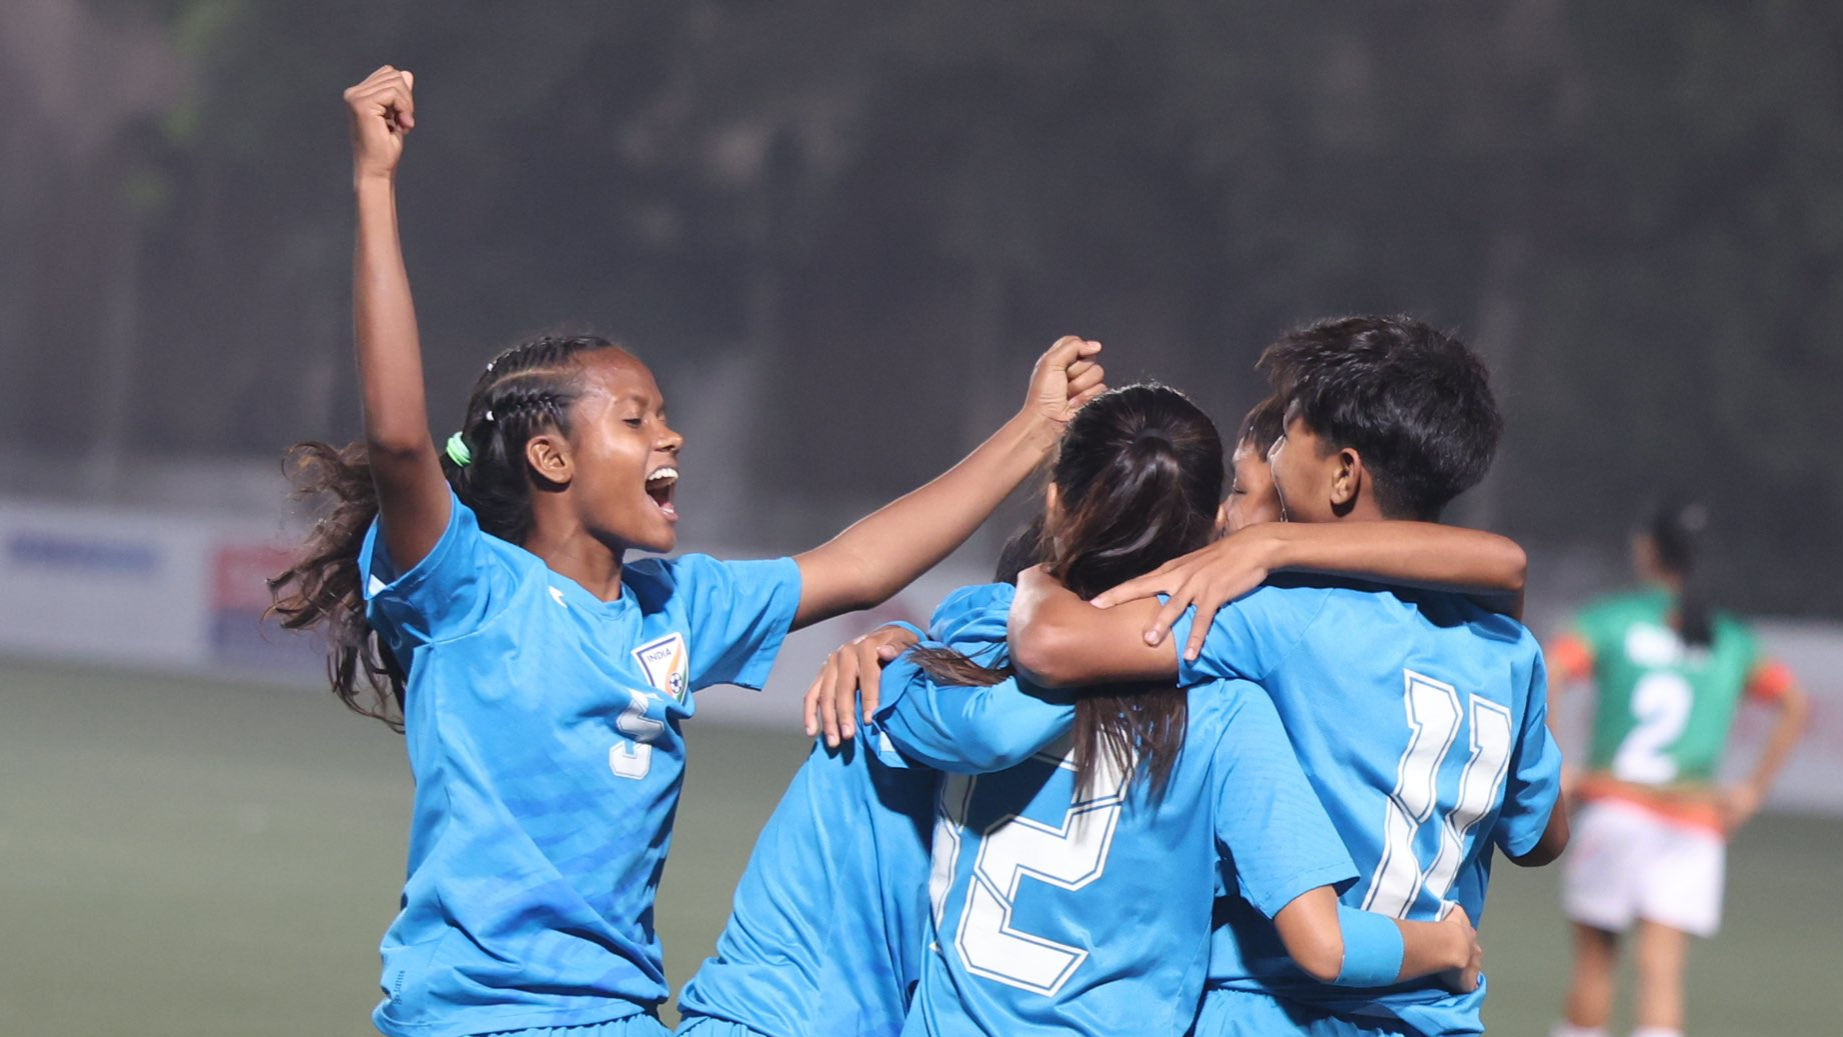 India declared jt winners of SAFF Women's U-19 C'ships with Bangla after winning via toss of coin- Republic World